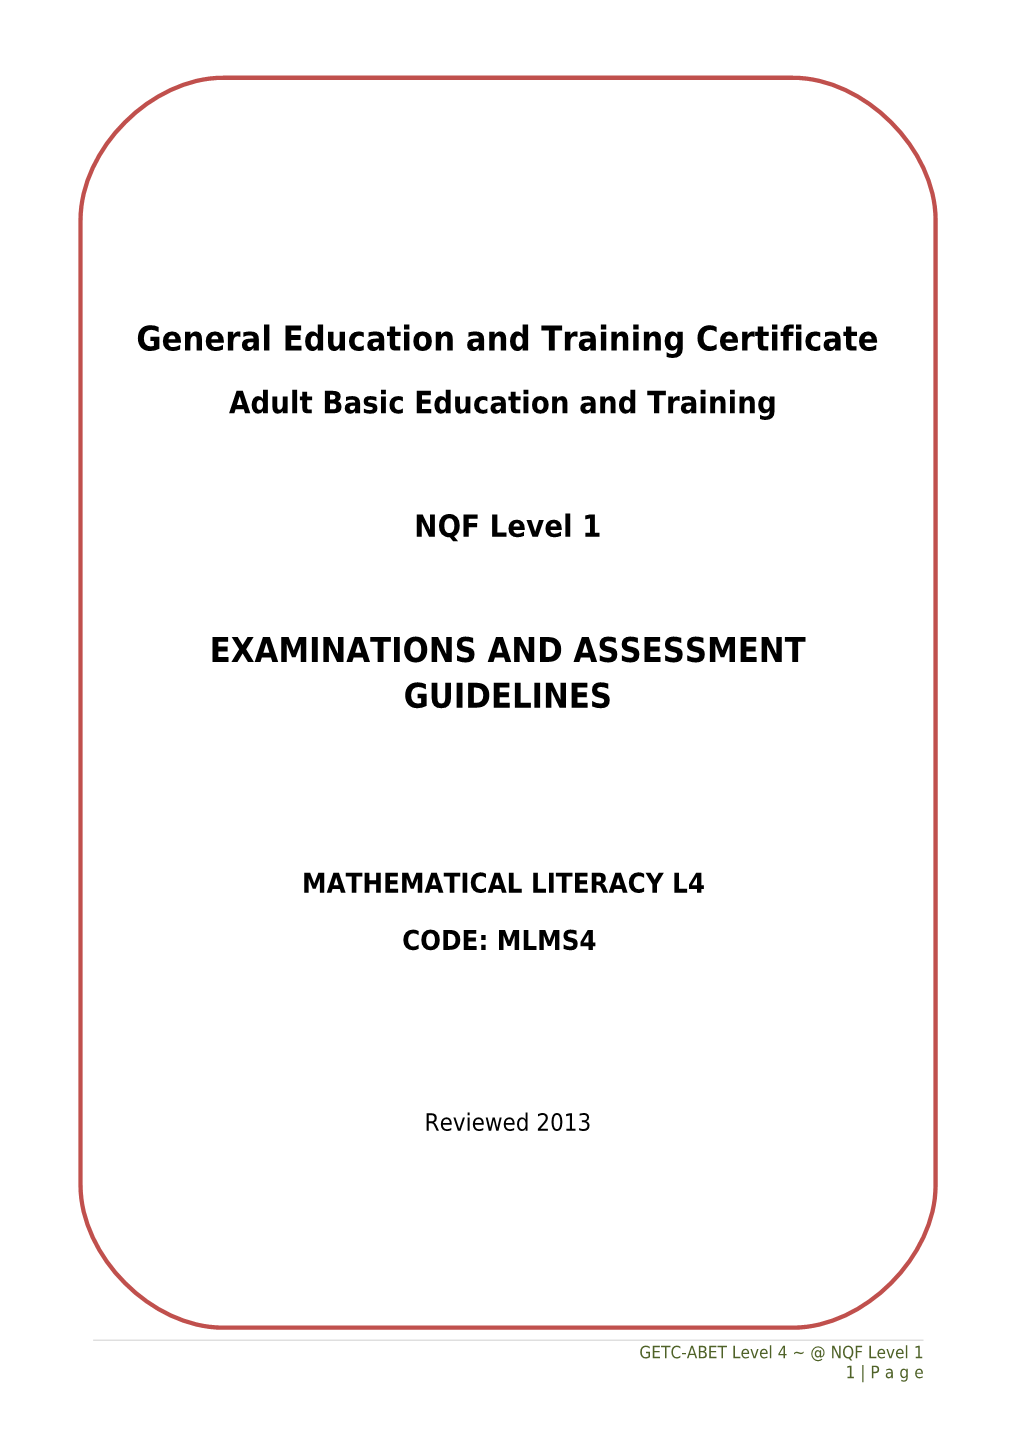 GETC-ABET Level 4 Examination Guidelines